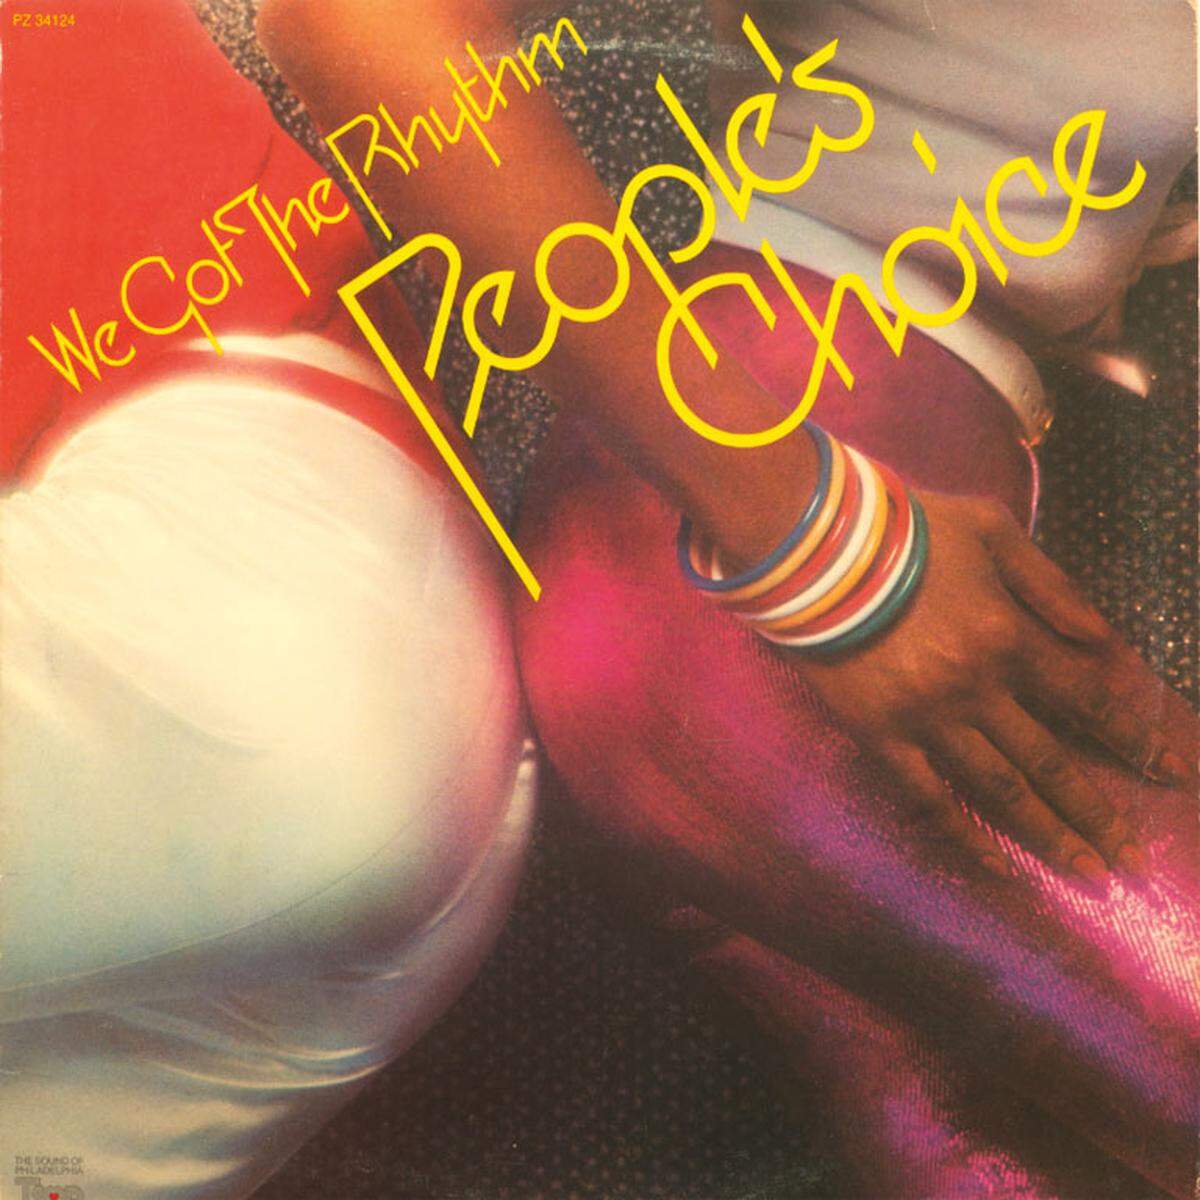 People's Choice: "We Got The Rhythm" (TSOP, 1976)